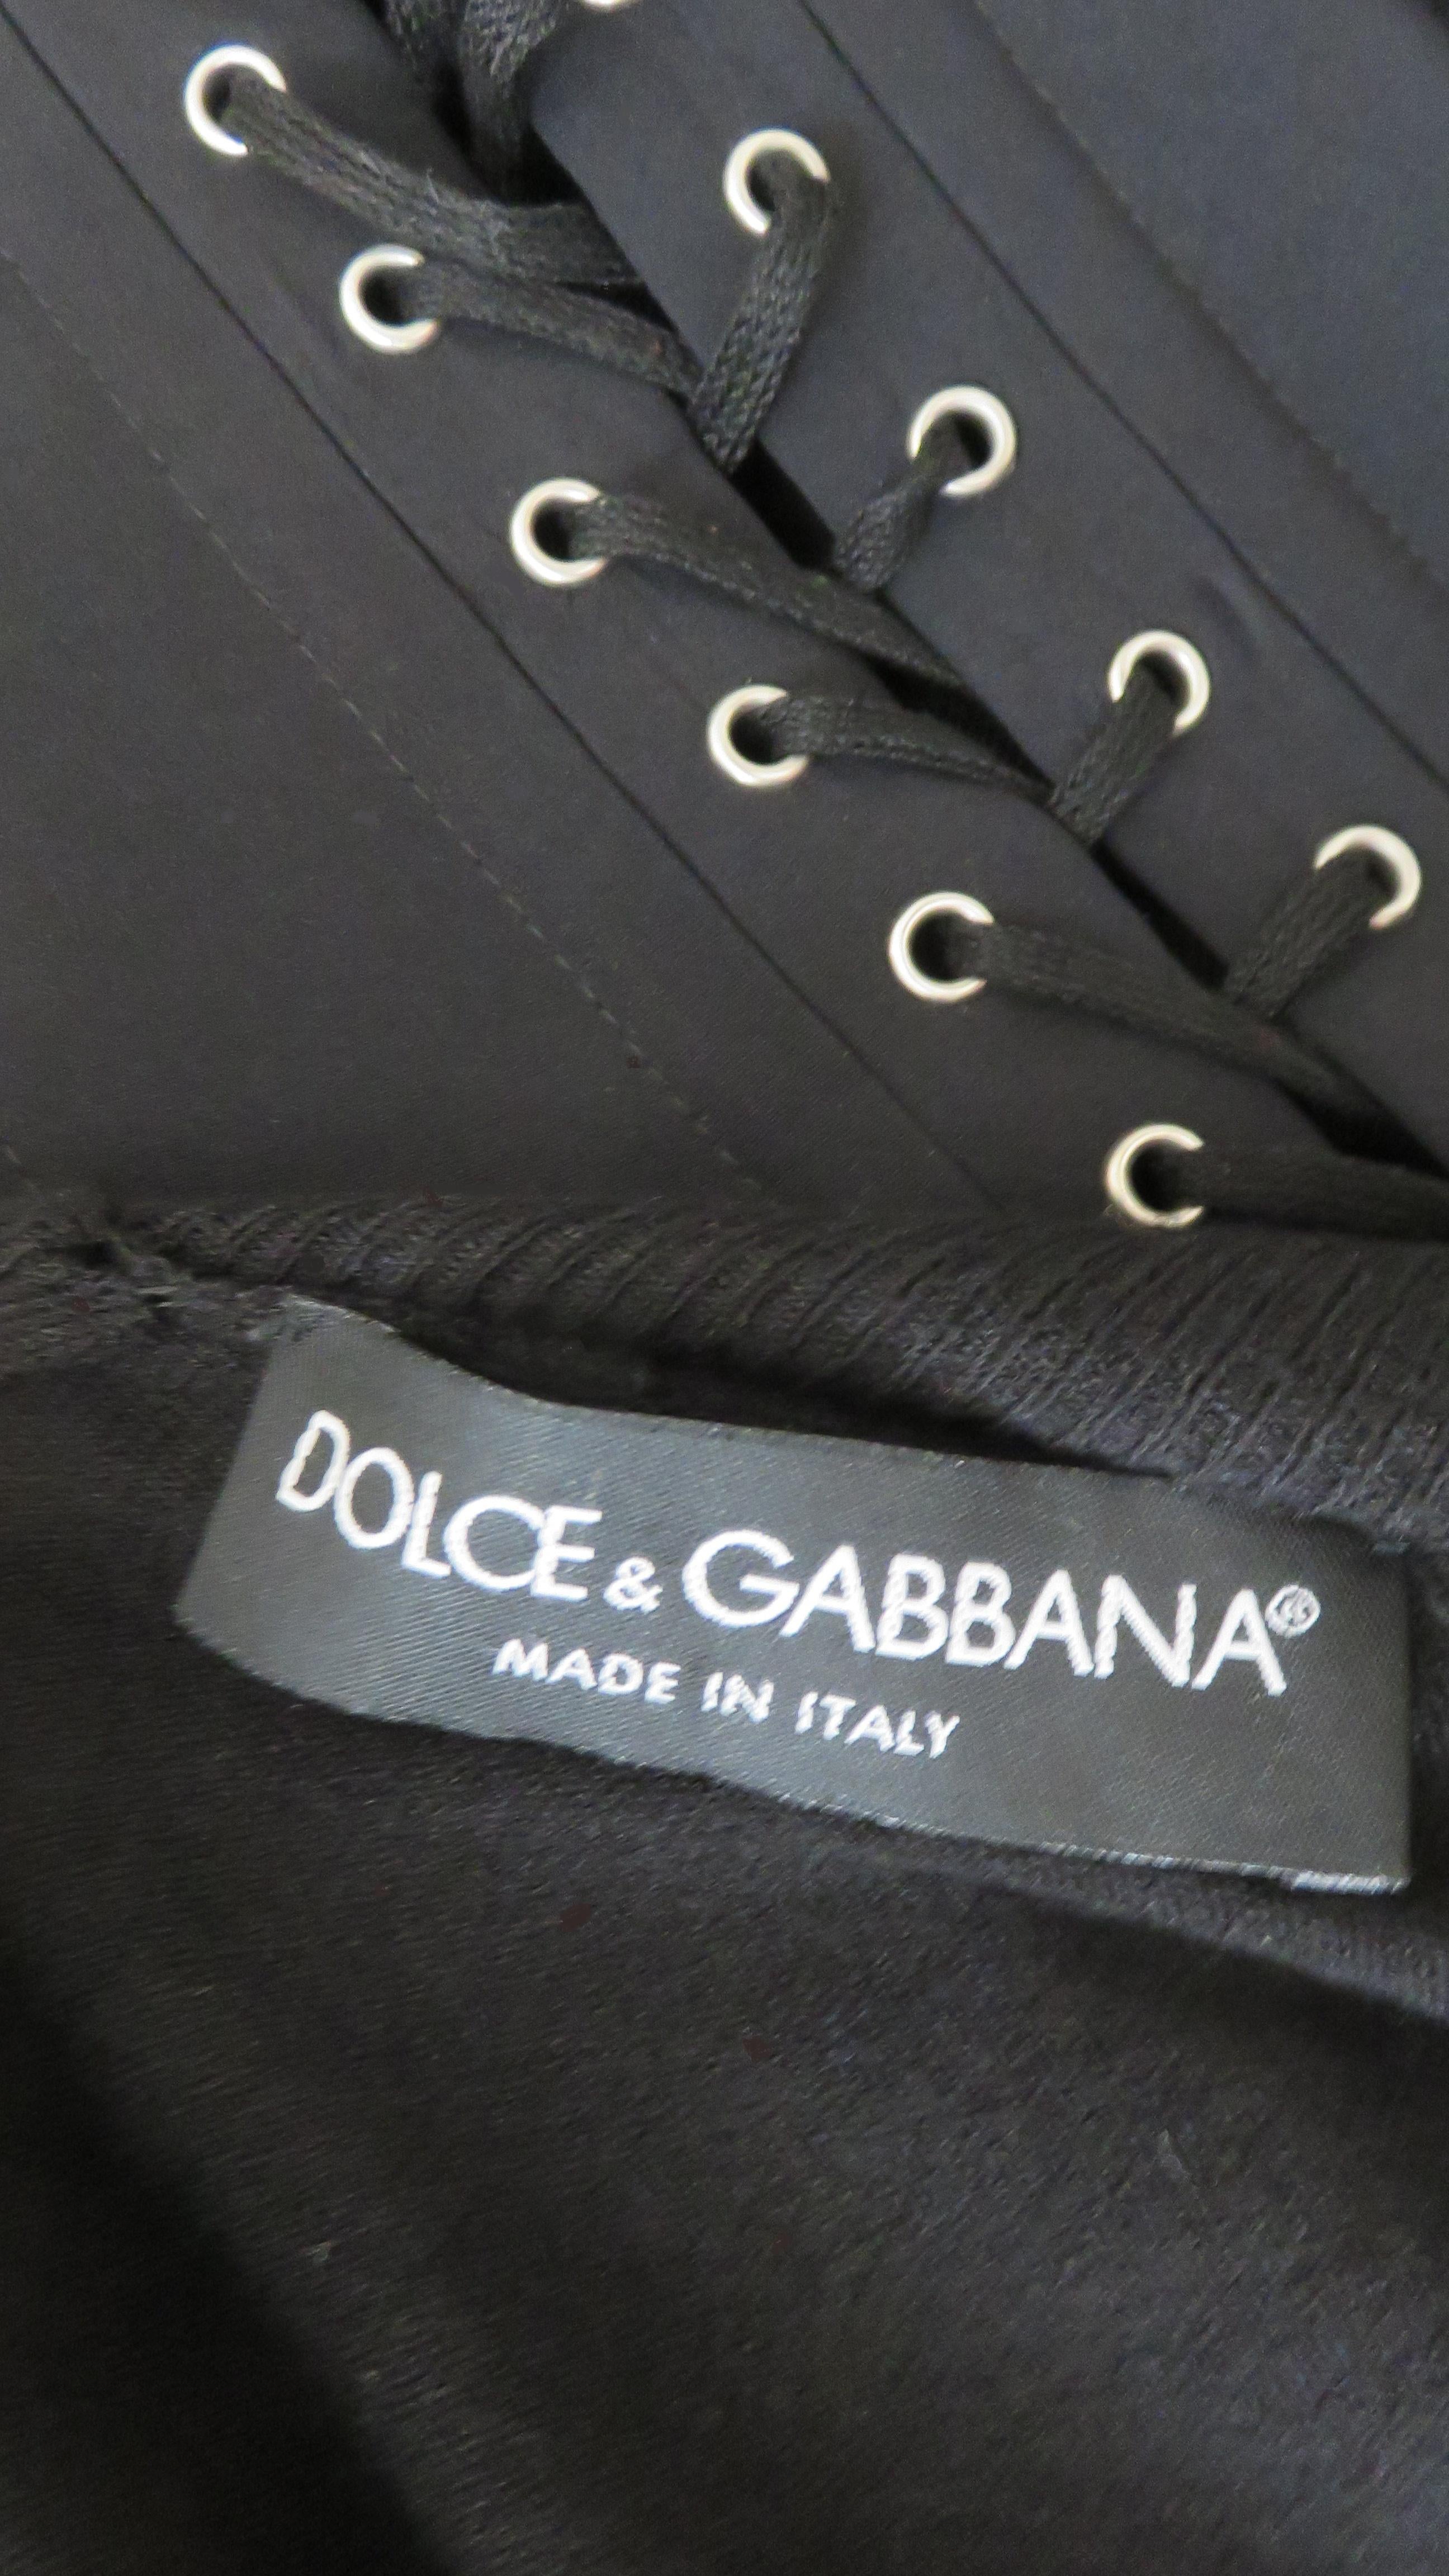 Dolce & Gabbana Lace up Corset and Cardigan Sweater Set 11